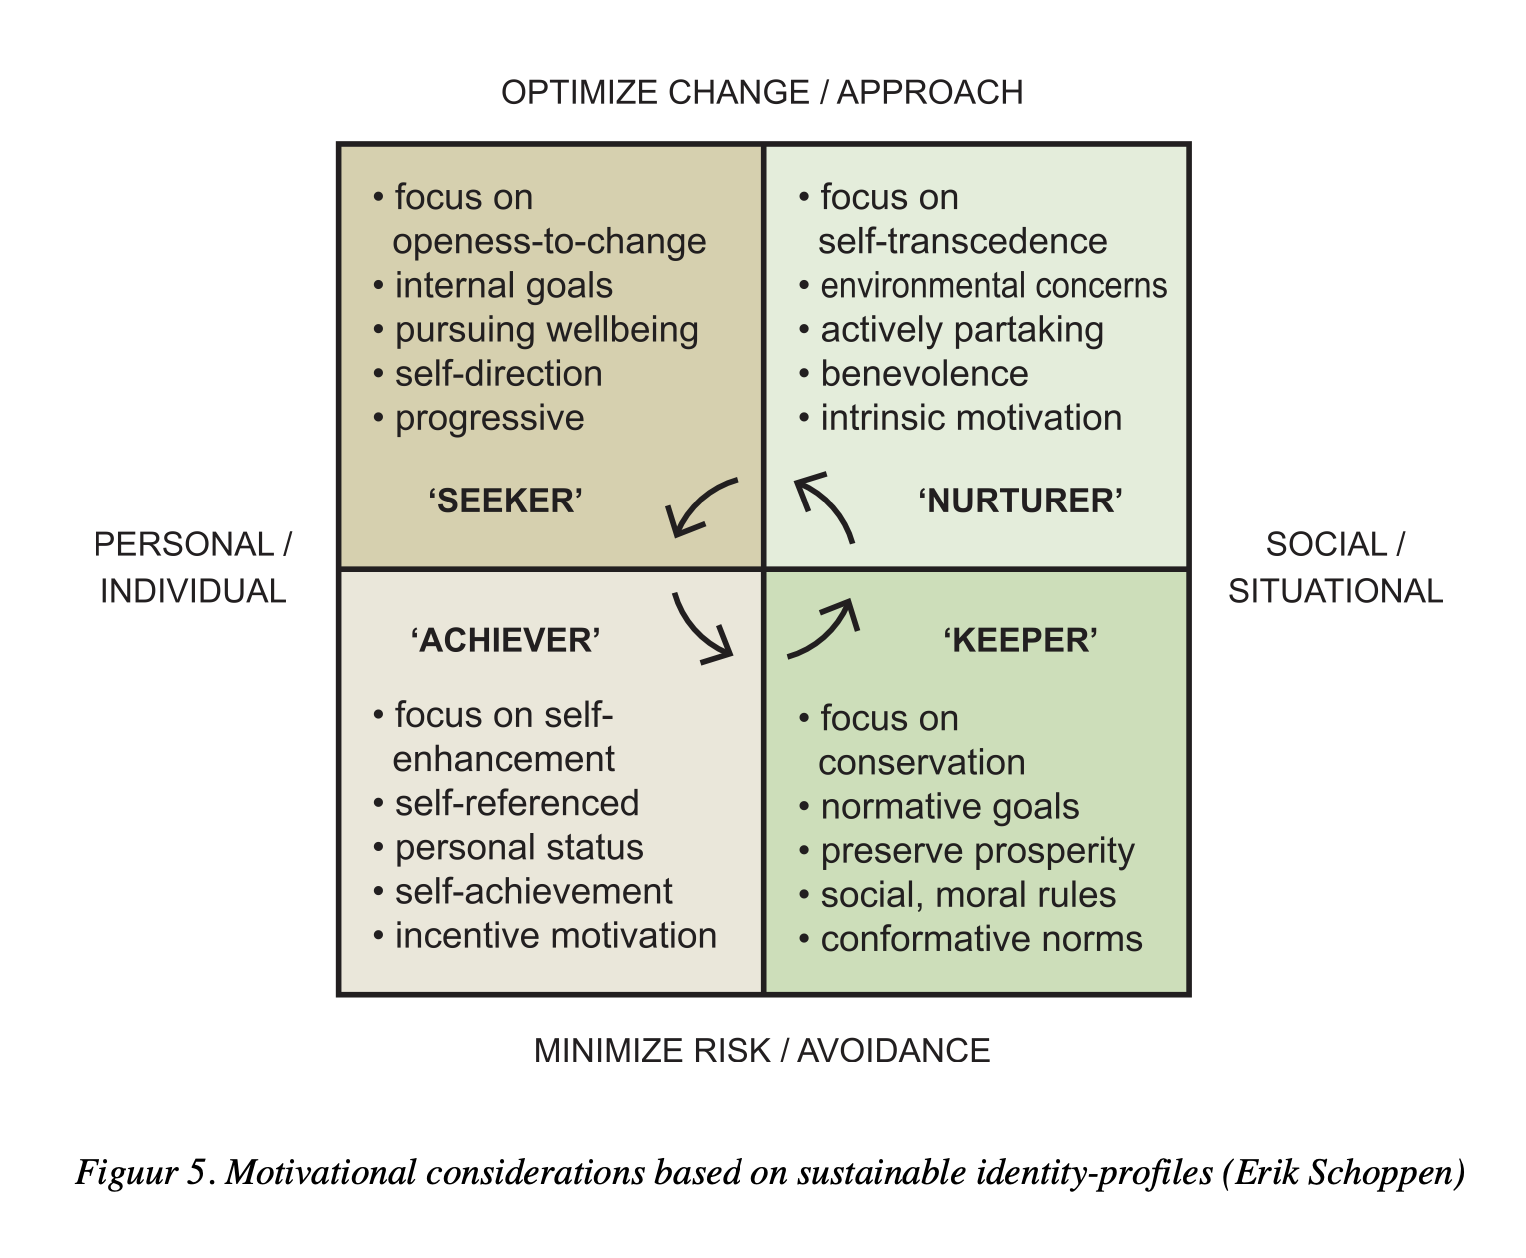 Motivational considerations based on sustainable identity-profiles (Erik Schoppen)